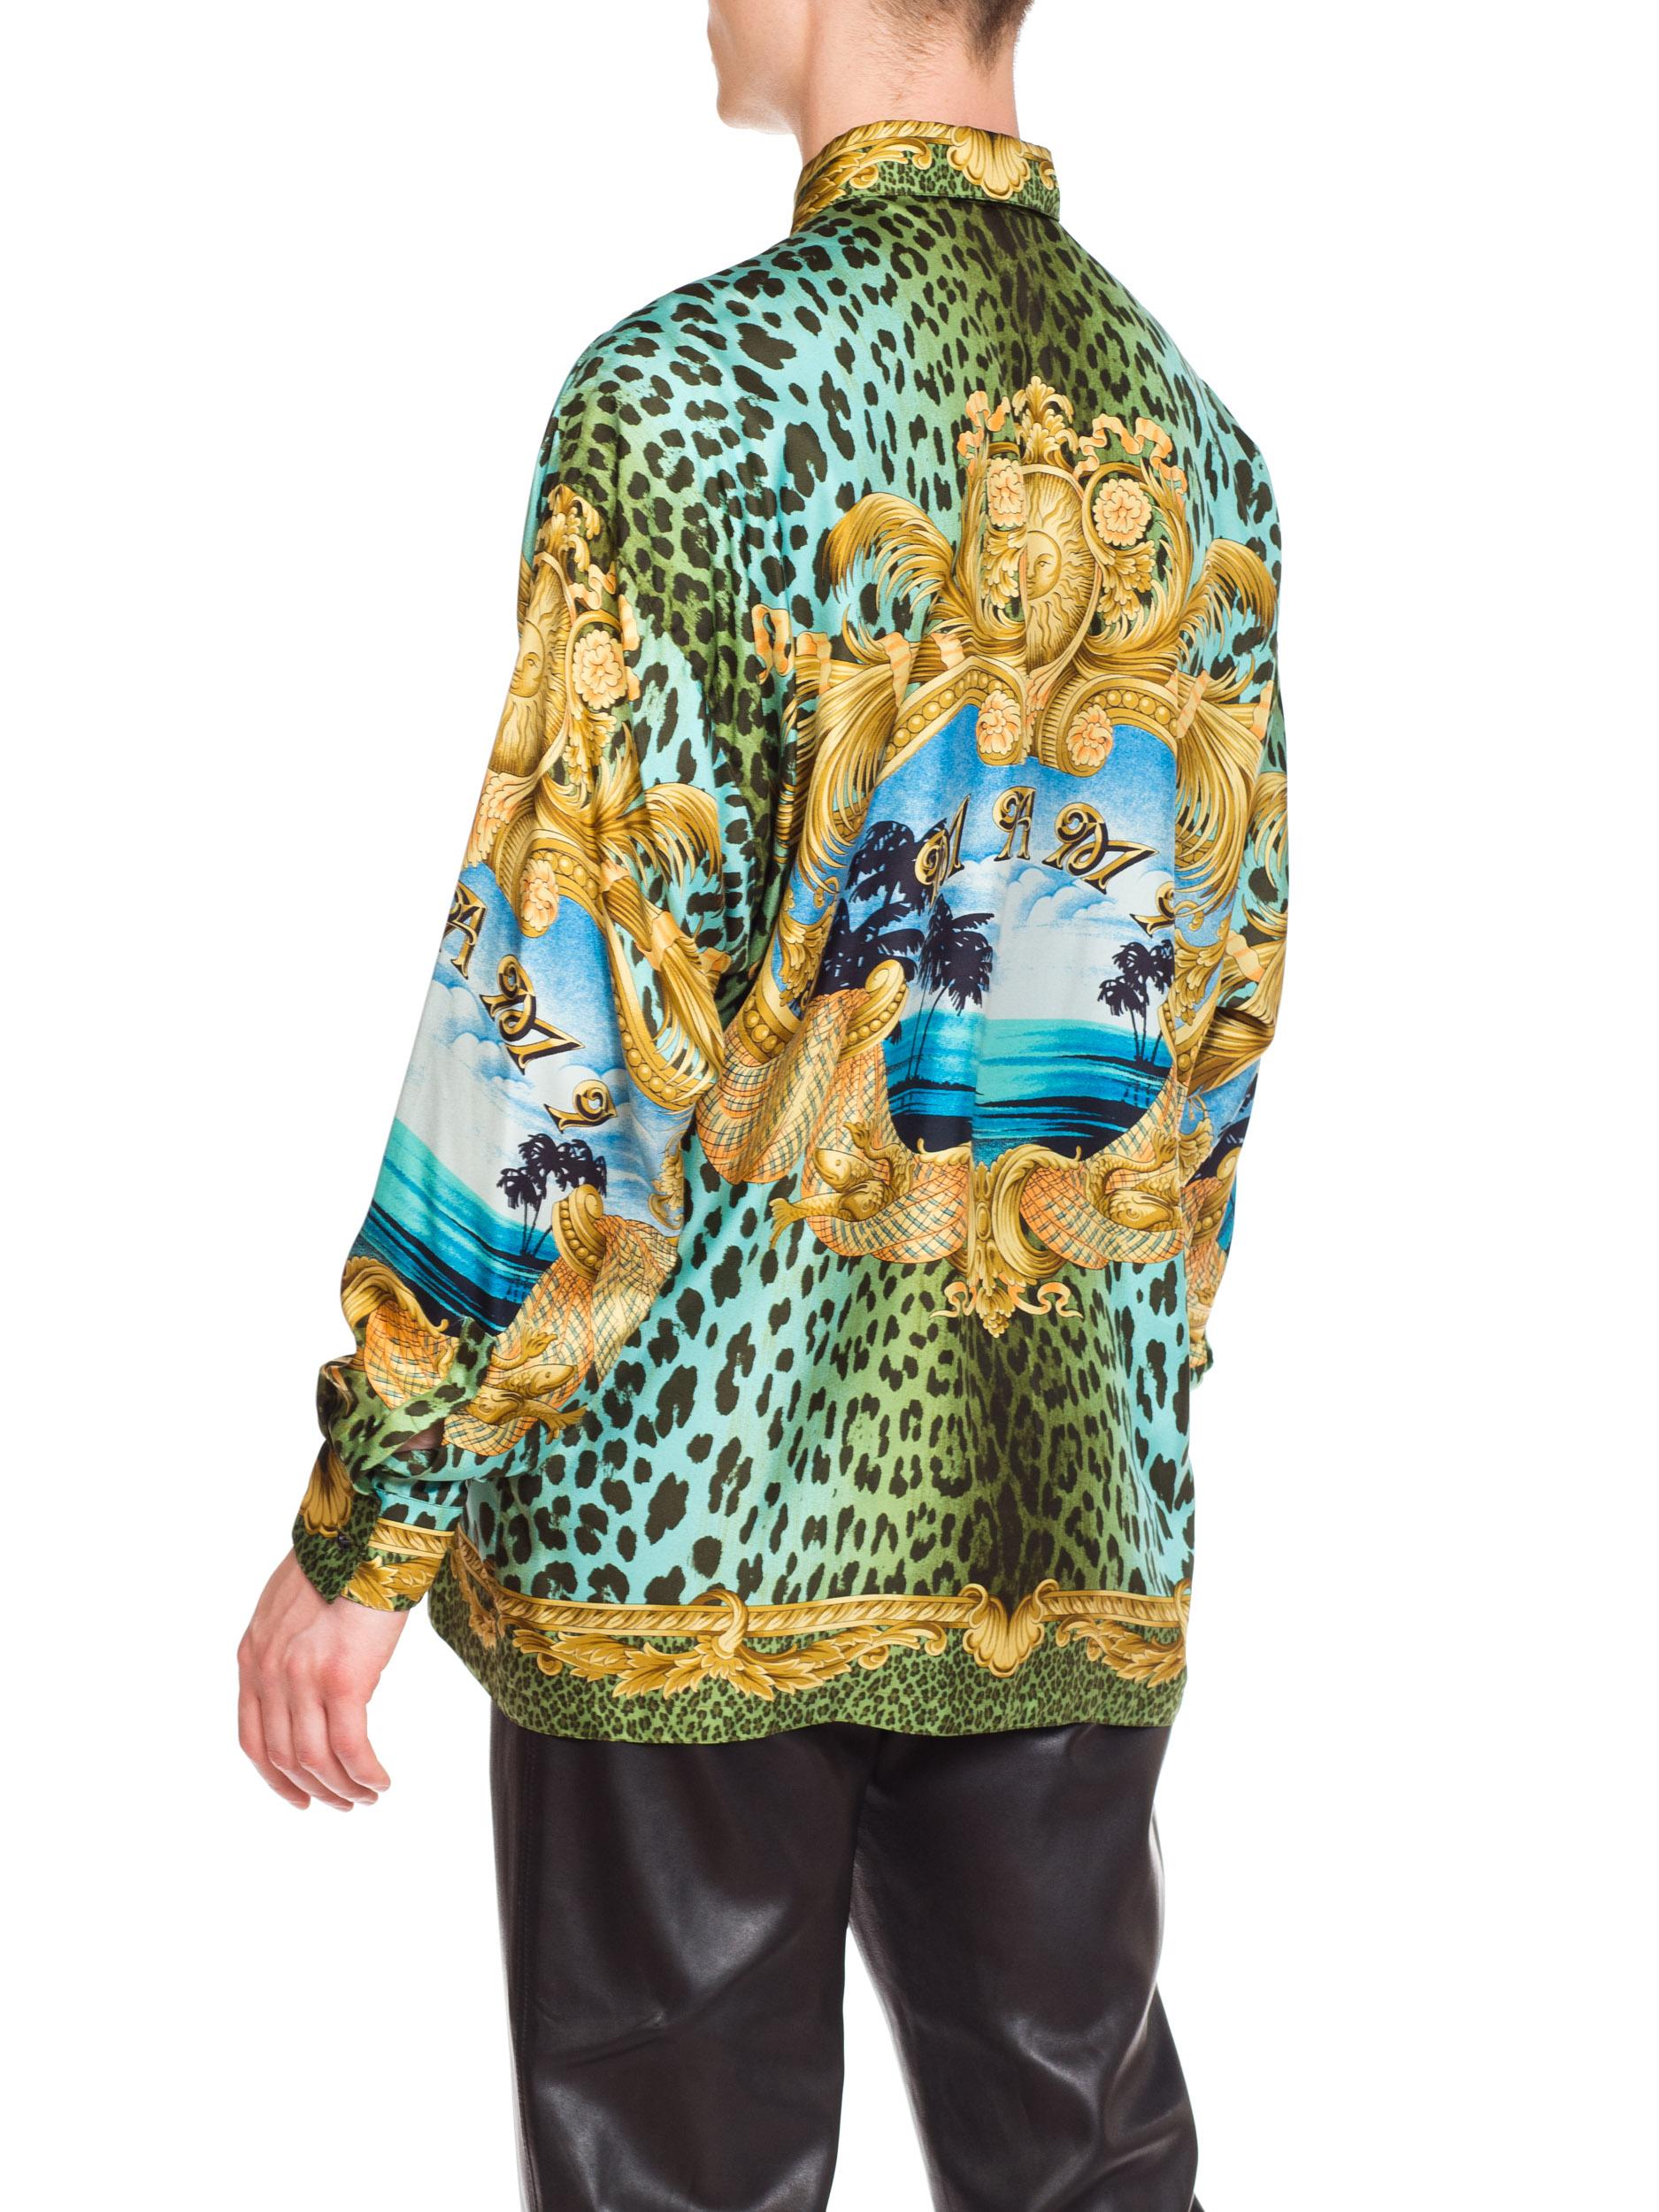 Gianni Versace Miami Leopard Baroque Silk Shirt, 1990s  1